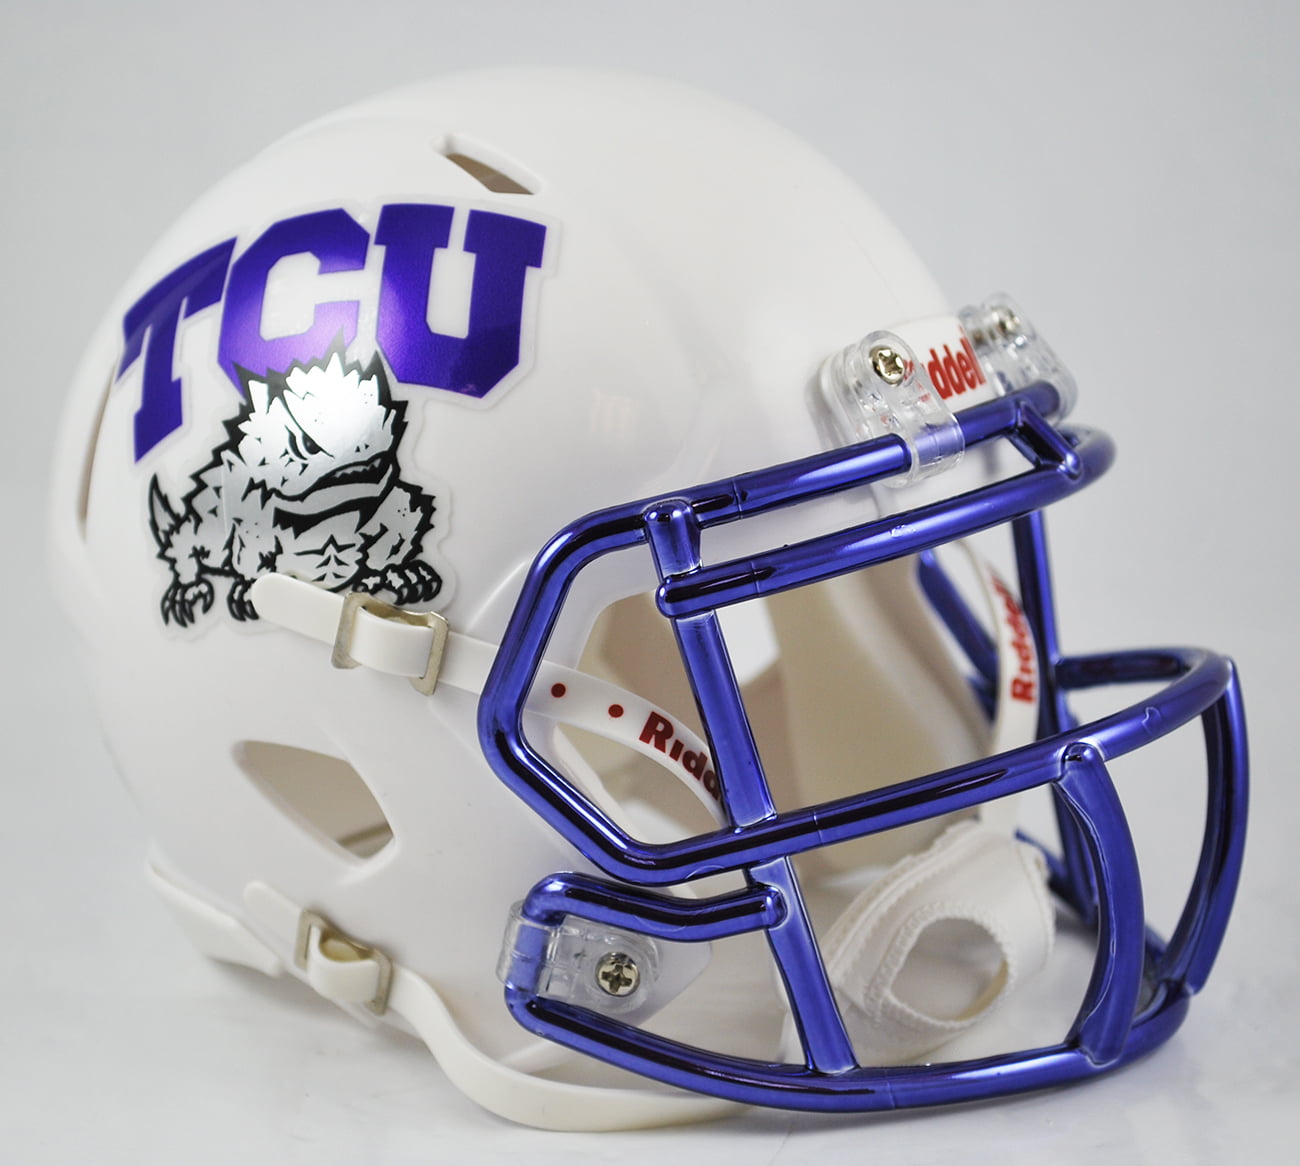 TCU Horned Frogs Football Helmet Composite Photo Size: 8 x 10